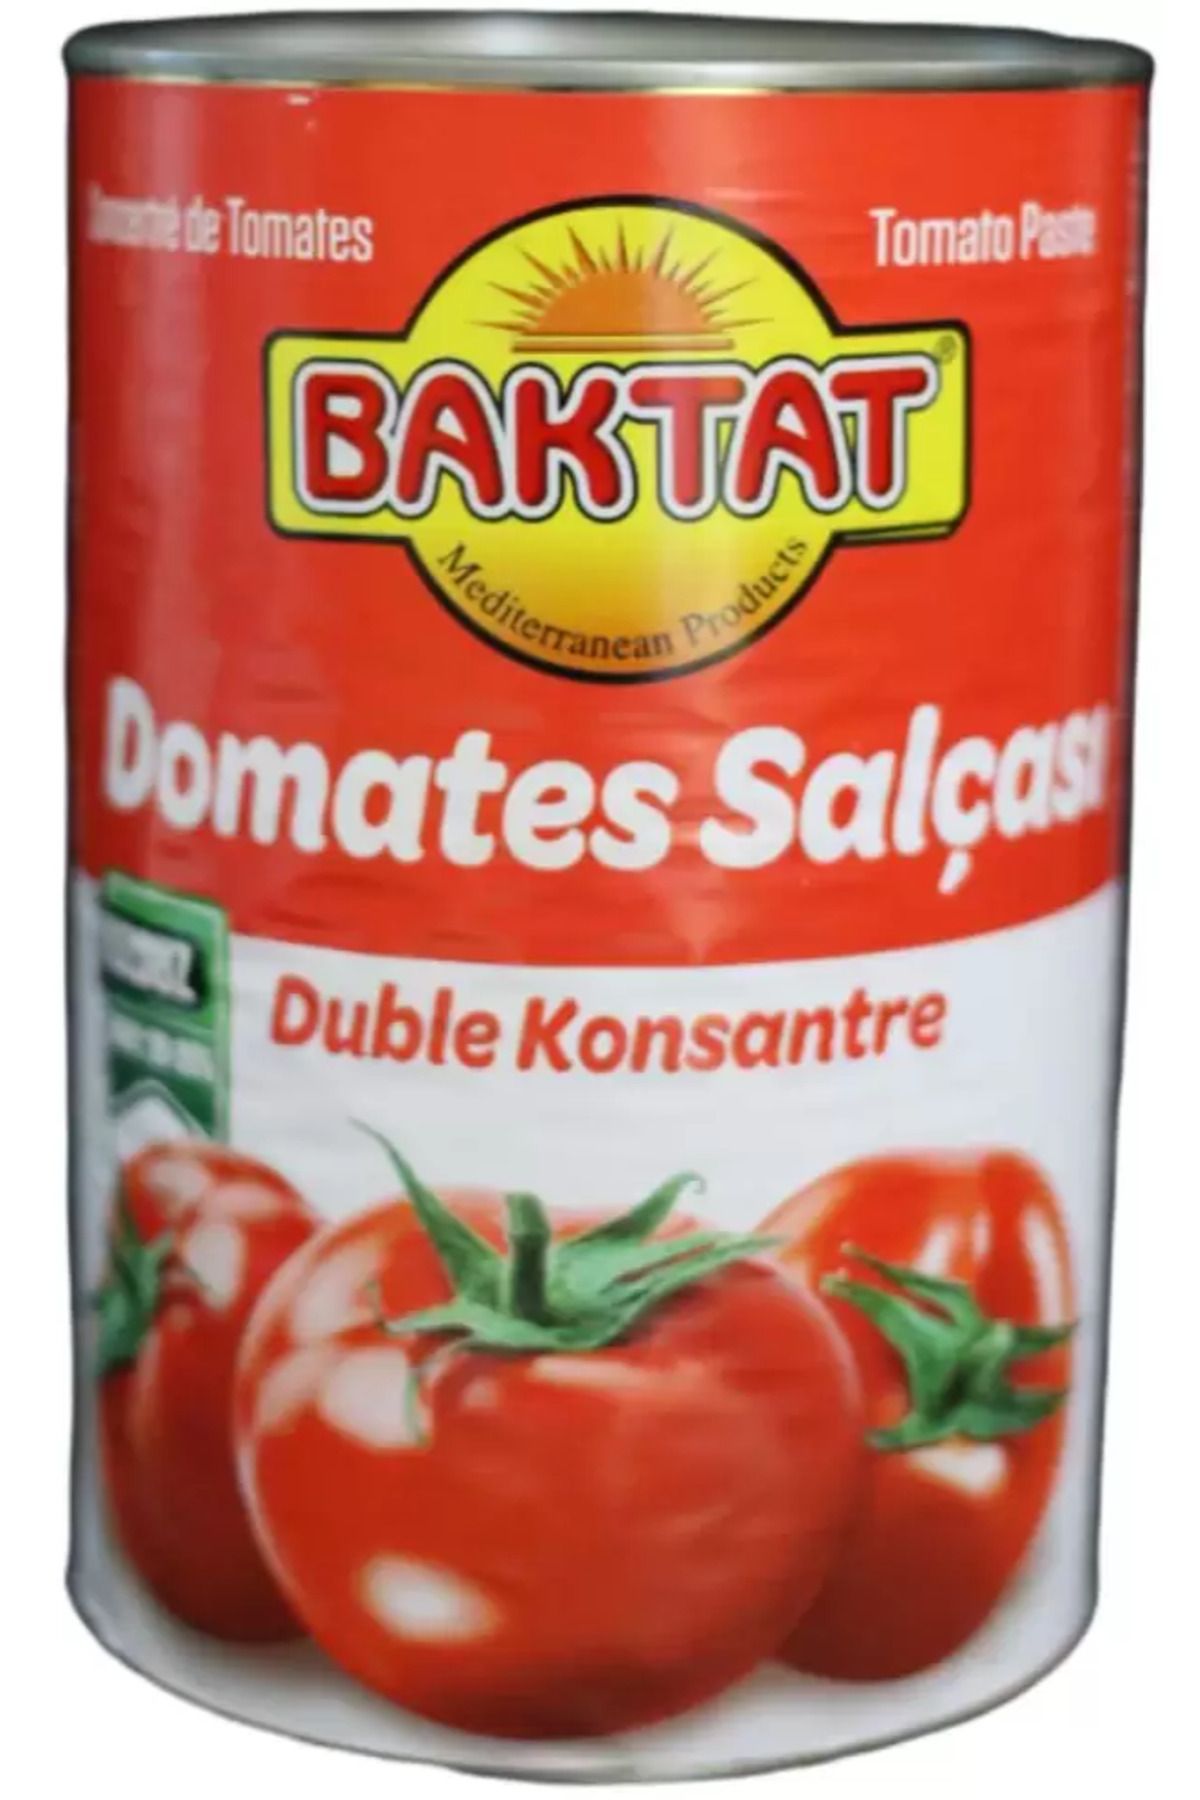 Baktat Domates salçası 5 kg